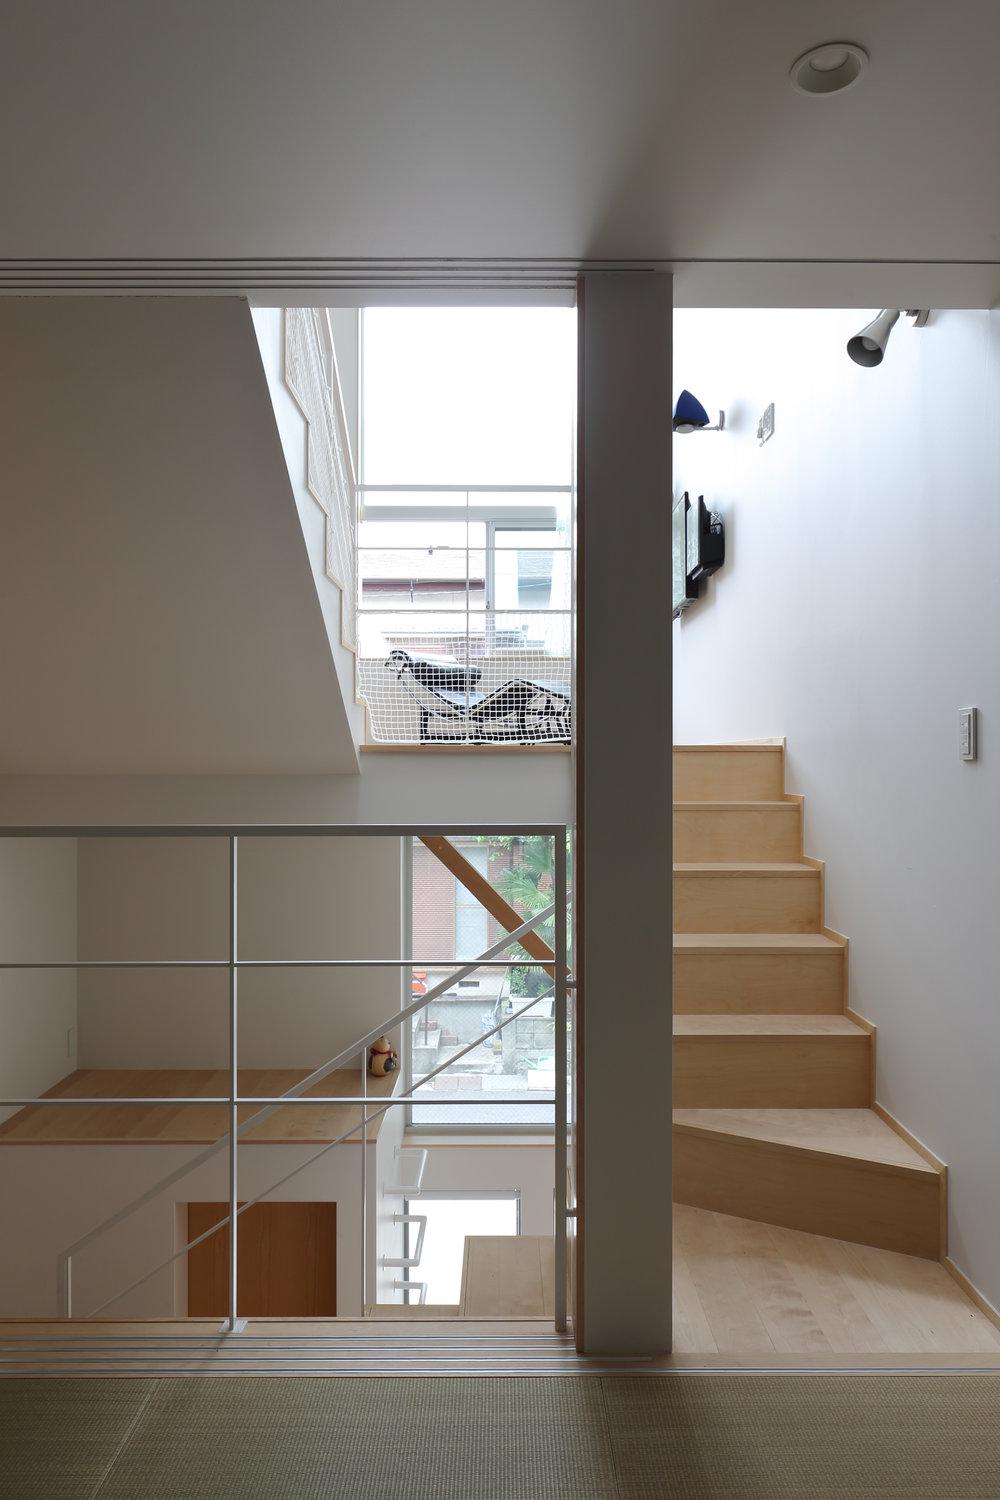 Image of "上野桜木の家", the work by architect : Ryu Mitarai (image number 4)